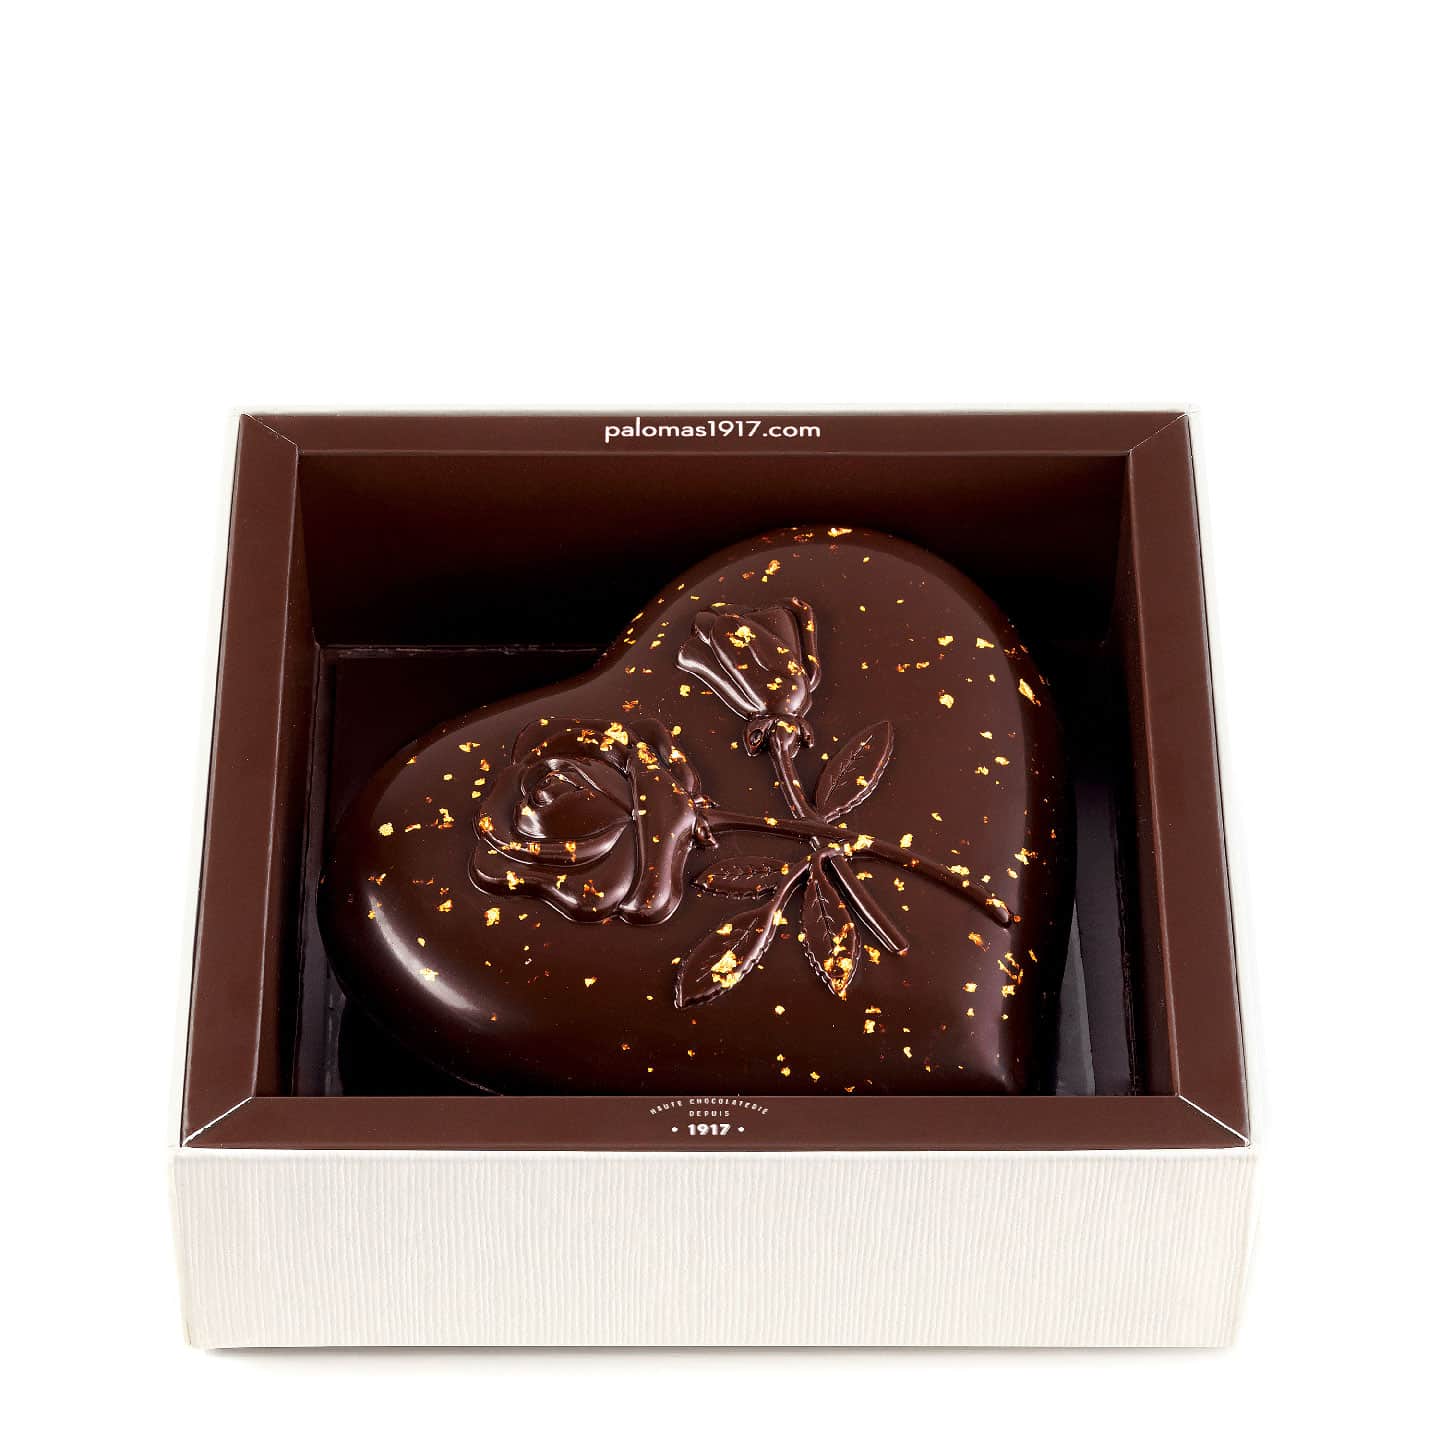 Palomas • Coeur Chocolat Noir Praliné Saint Valentin 170g Coeur